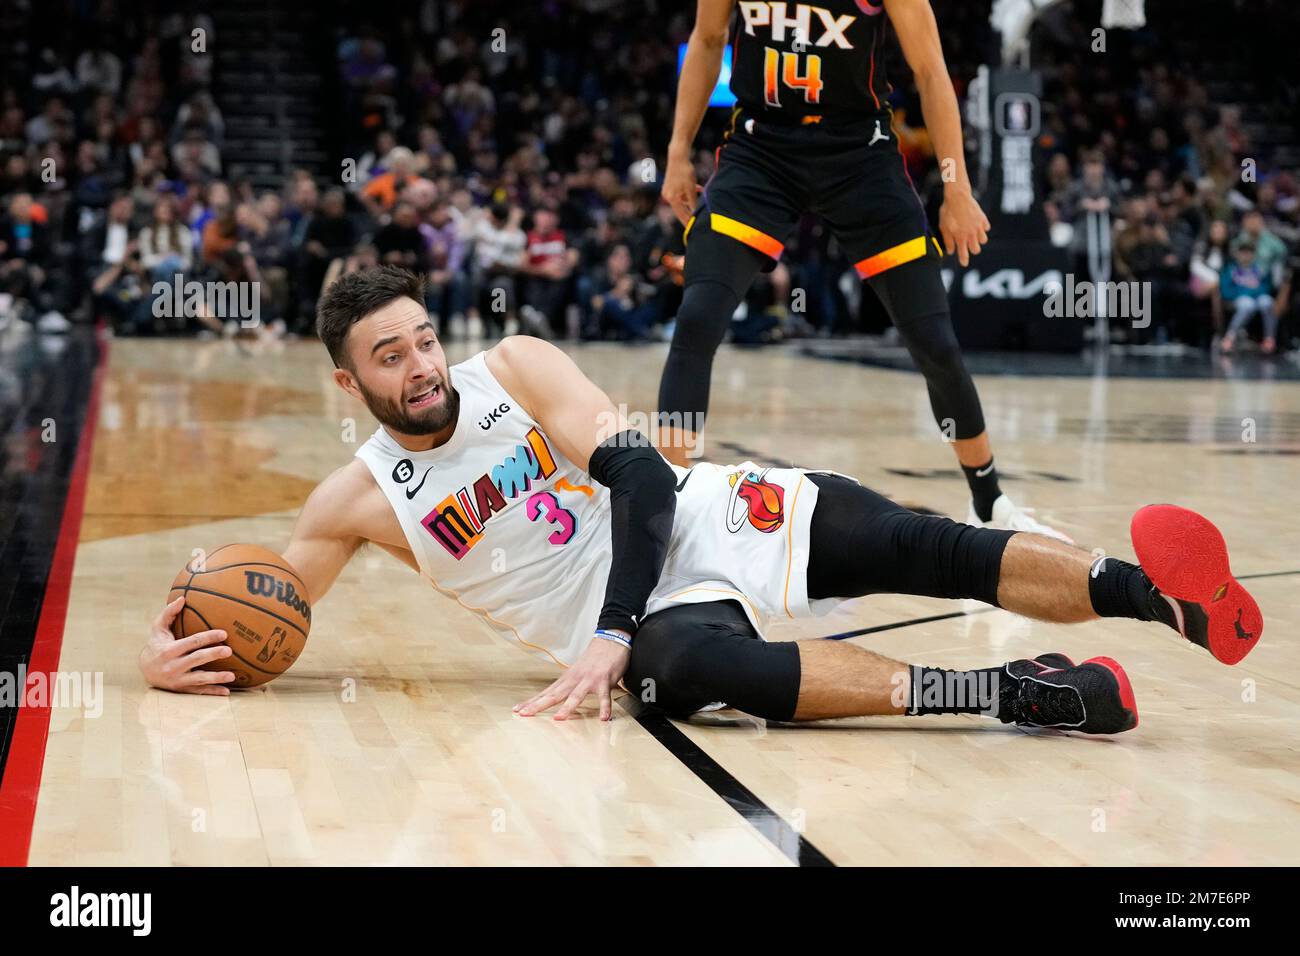 Photos: Phoenix Suns vs. Miami Heat